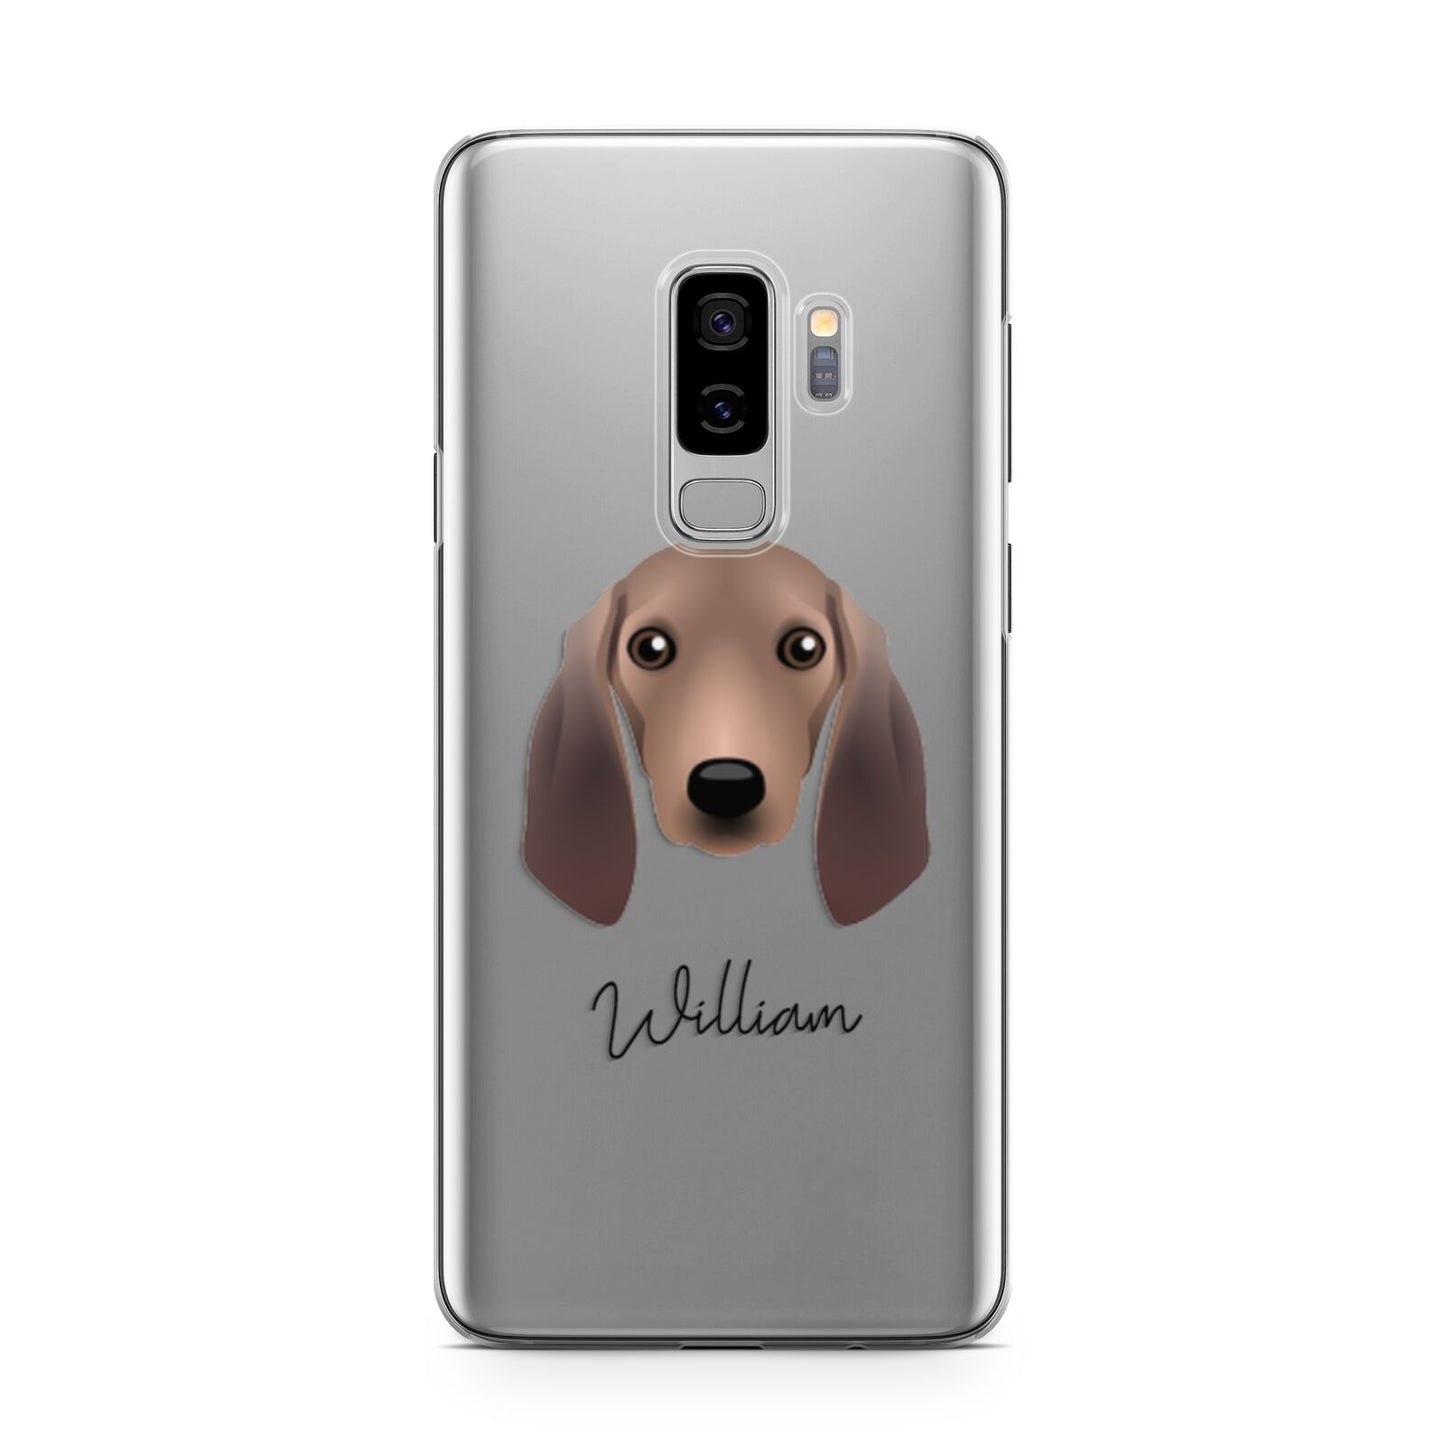 Segugio Italiano Personalised Samsung Galaxy S9 Plus Case on Silver phone